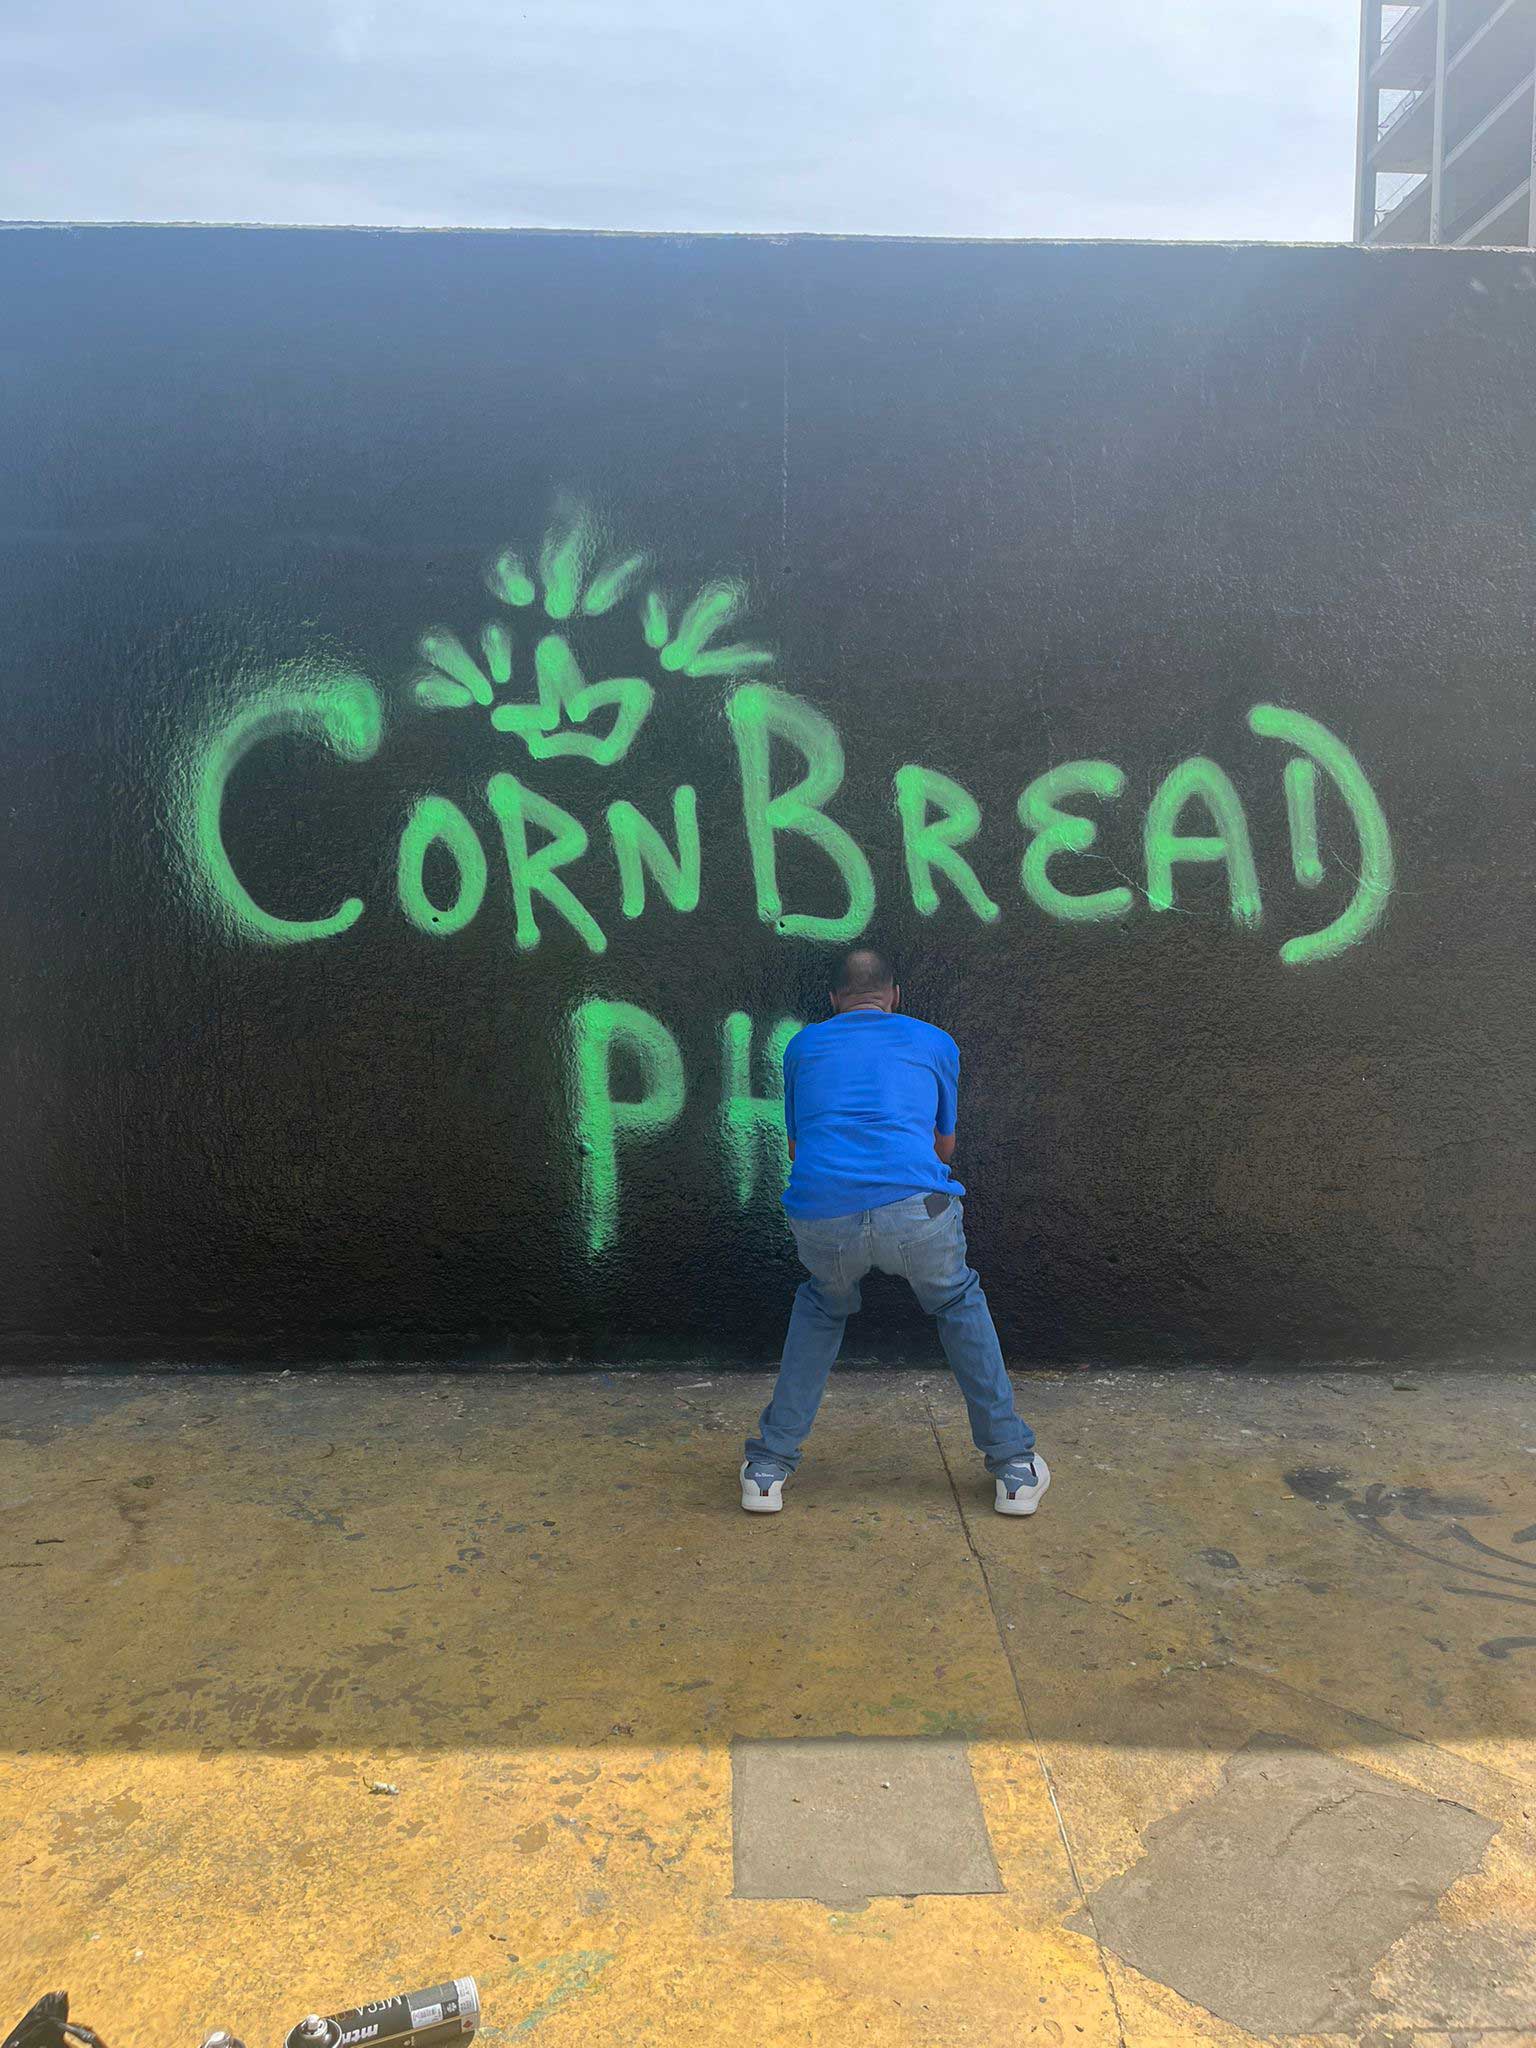 street art gallery Barcelona cornbread